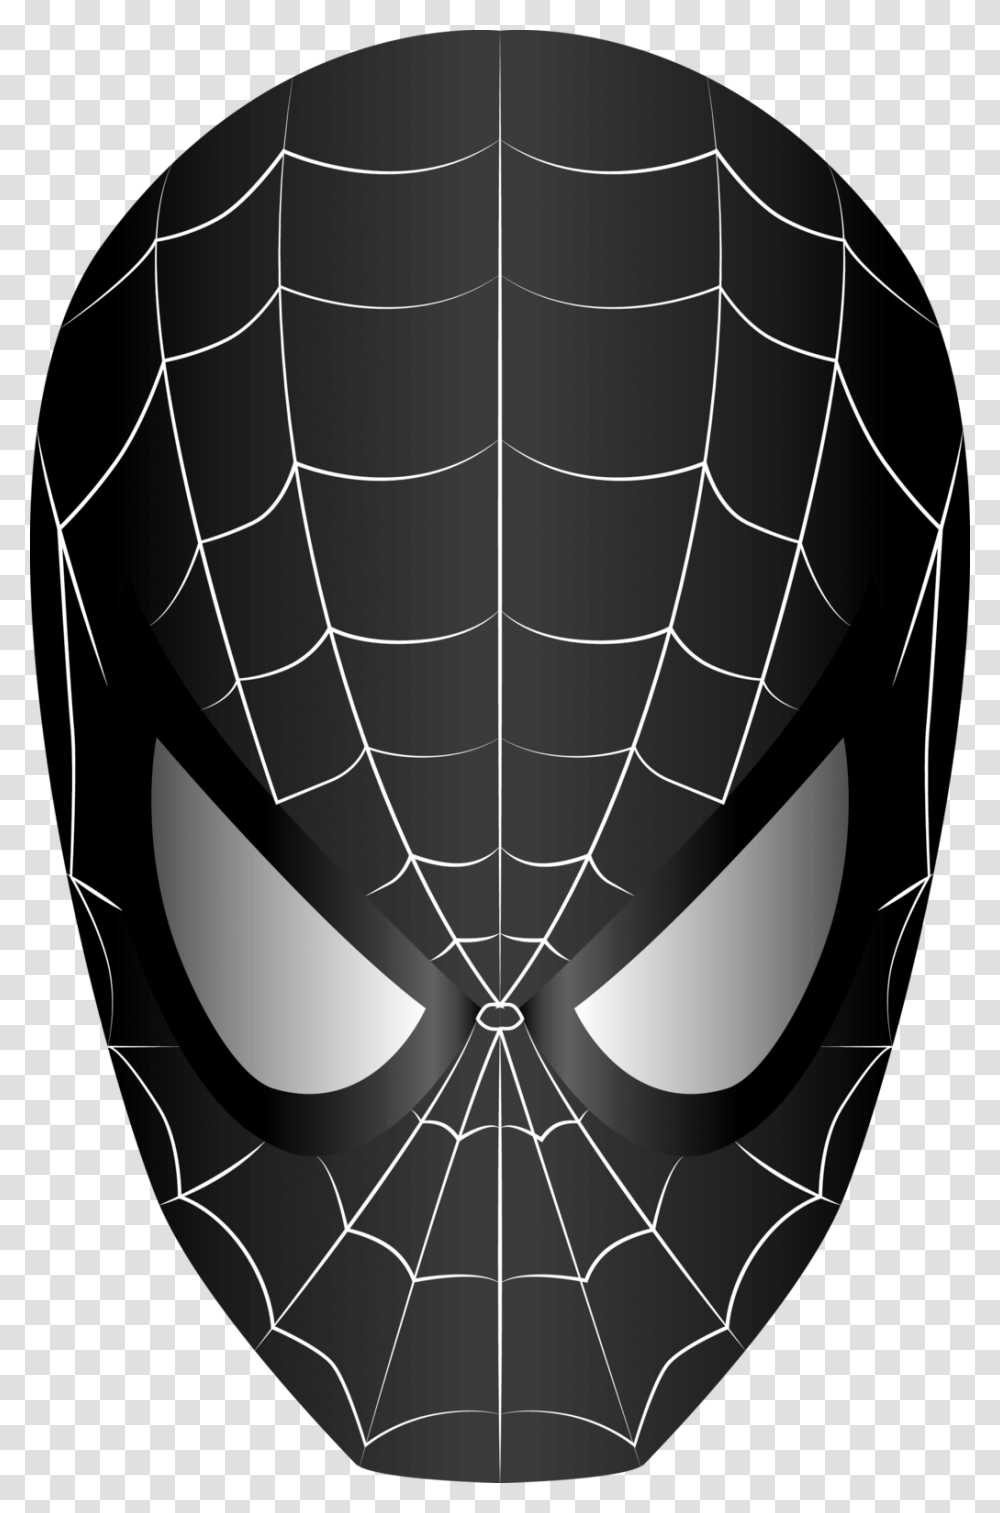 Black Spiderman Mask Clipart Spider Man Black Mask, Hot Air Balloon, Aircraft, Vehicle, Transportation Transparent Png